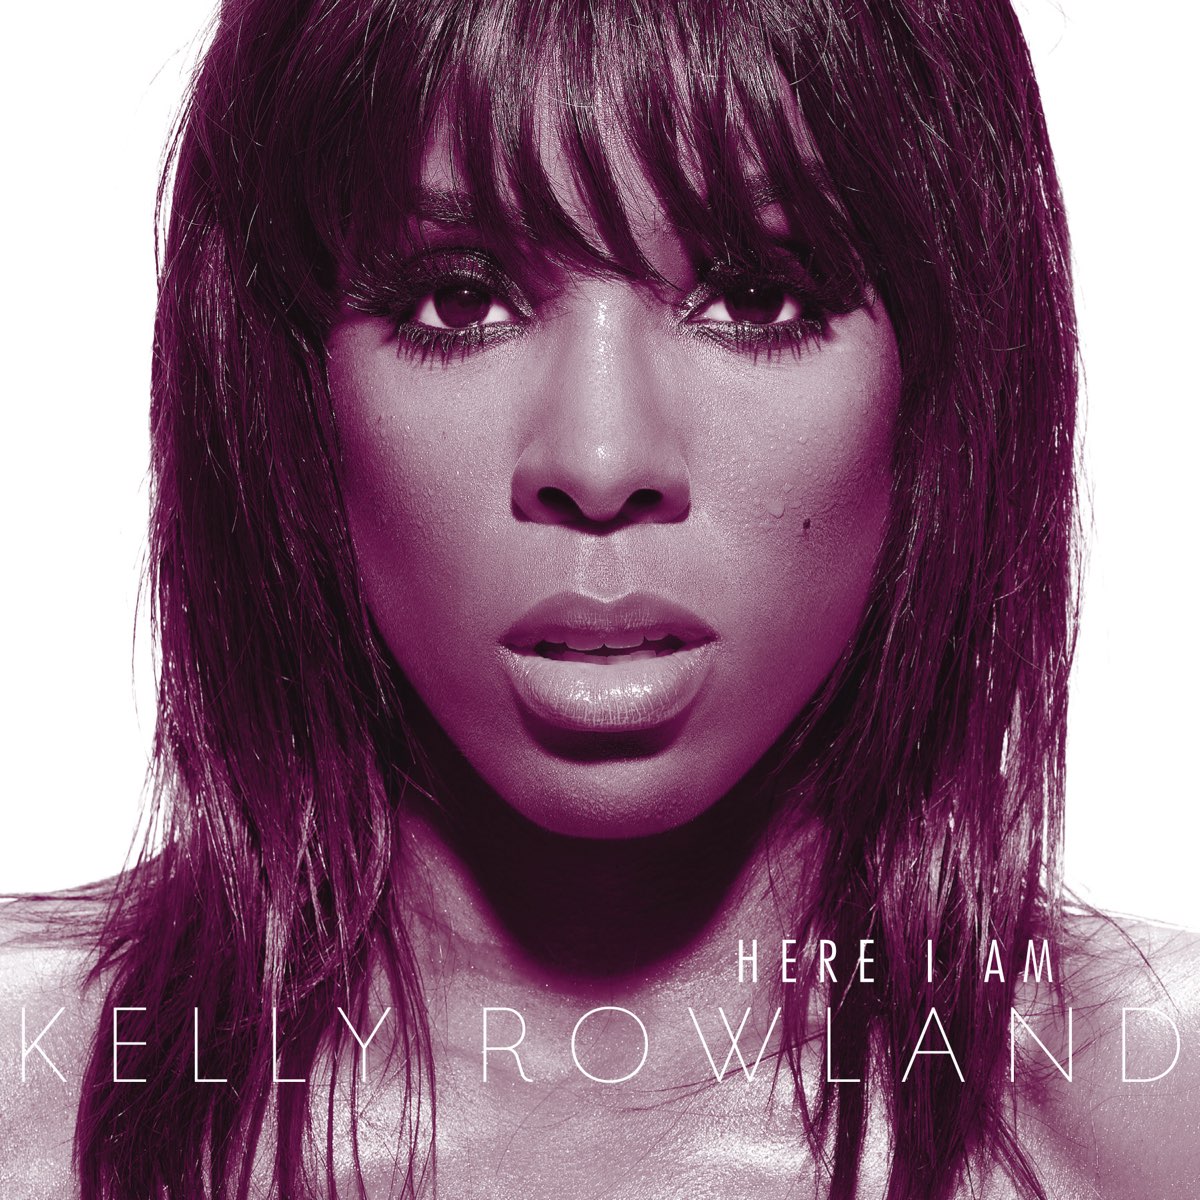 Here I Am (International Bonus Track Edition) by Kelly Rowland.